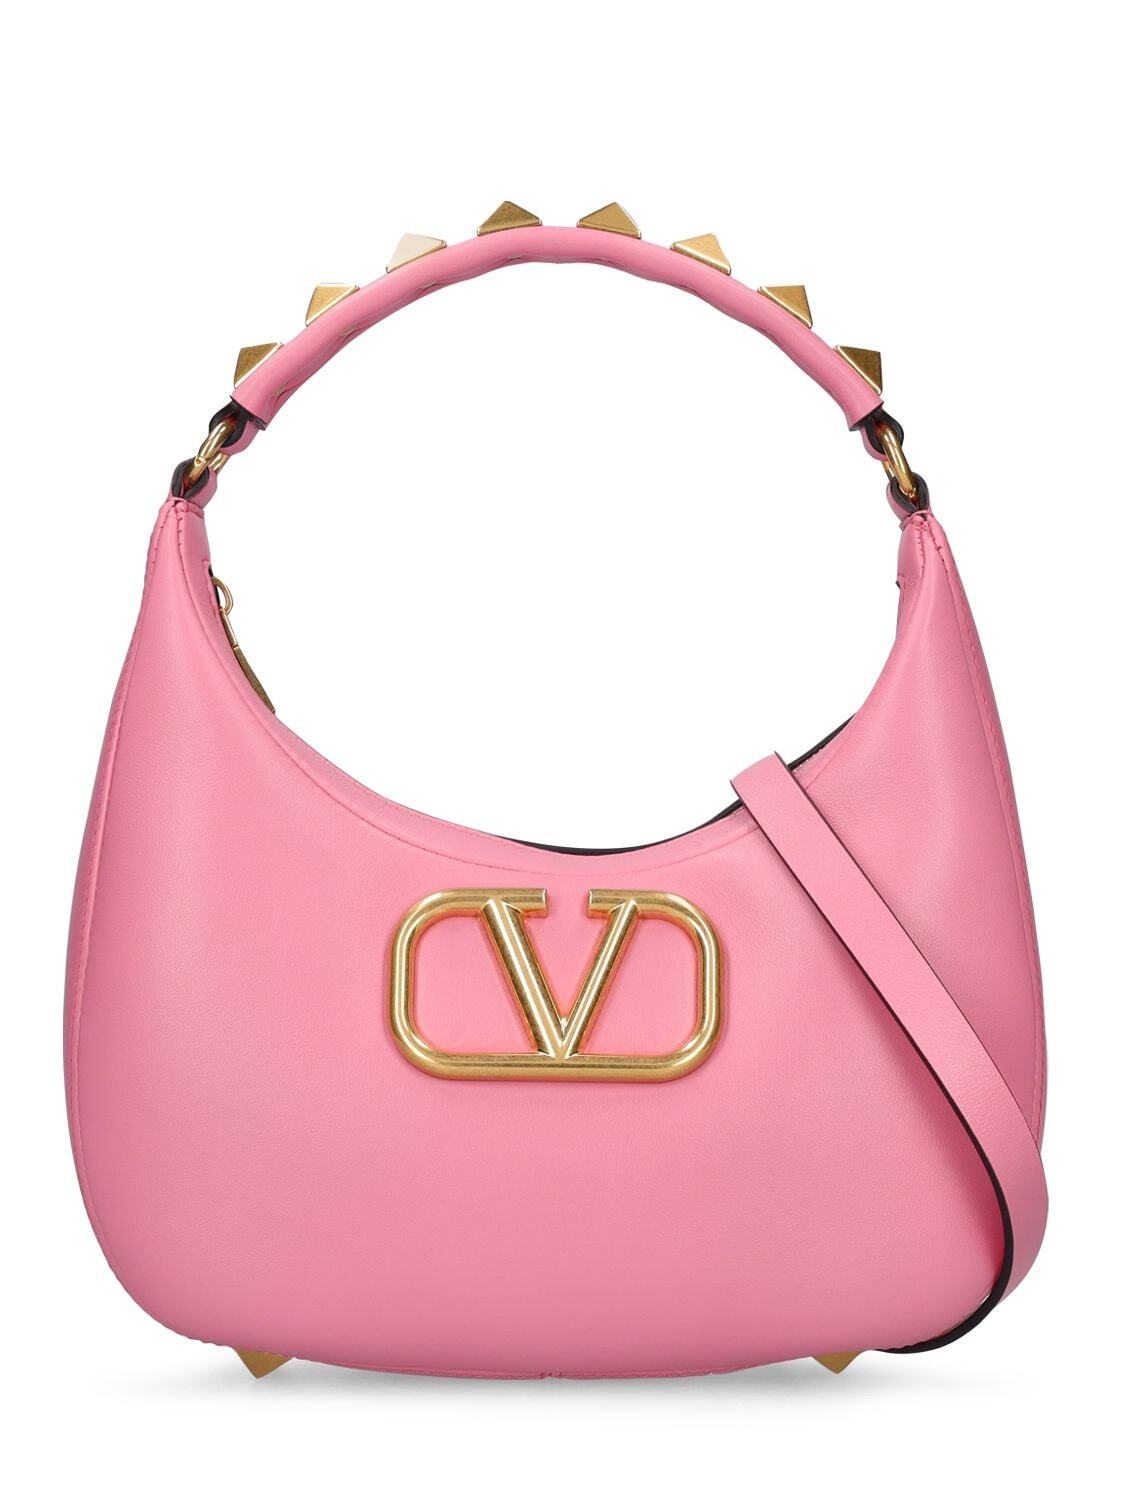 VALENTINO GARAVANI Stud Sign Hobo Leather Bag in pink